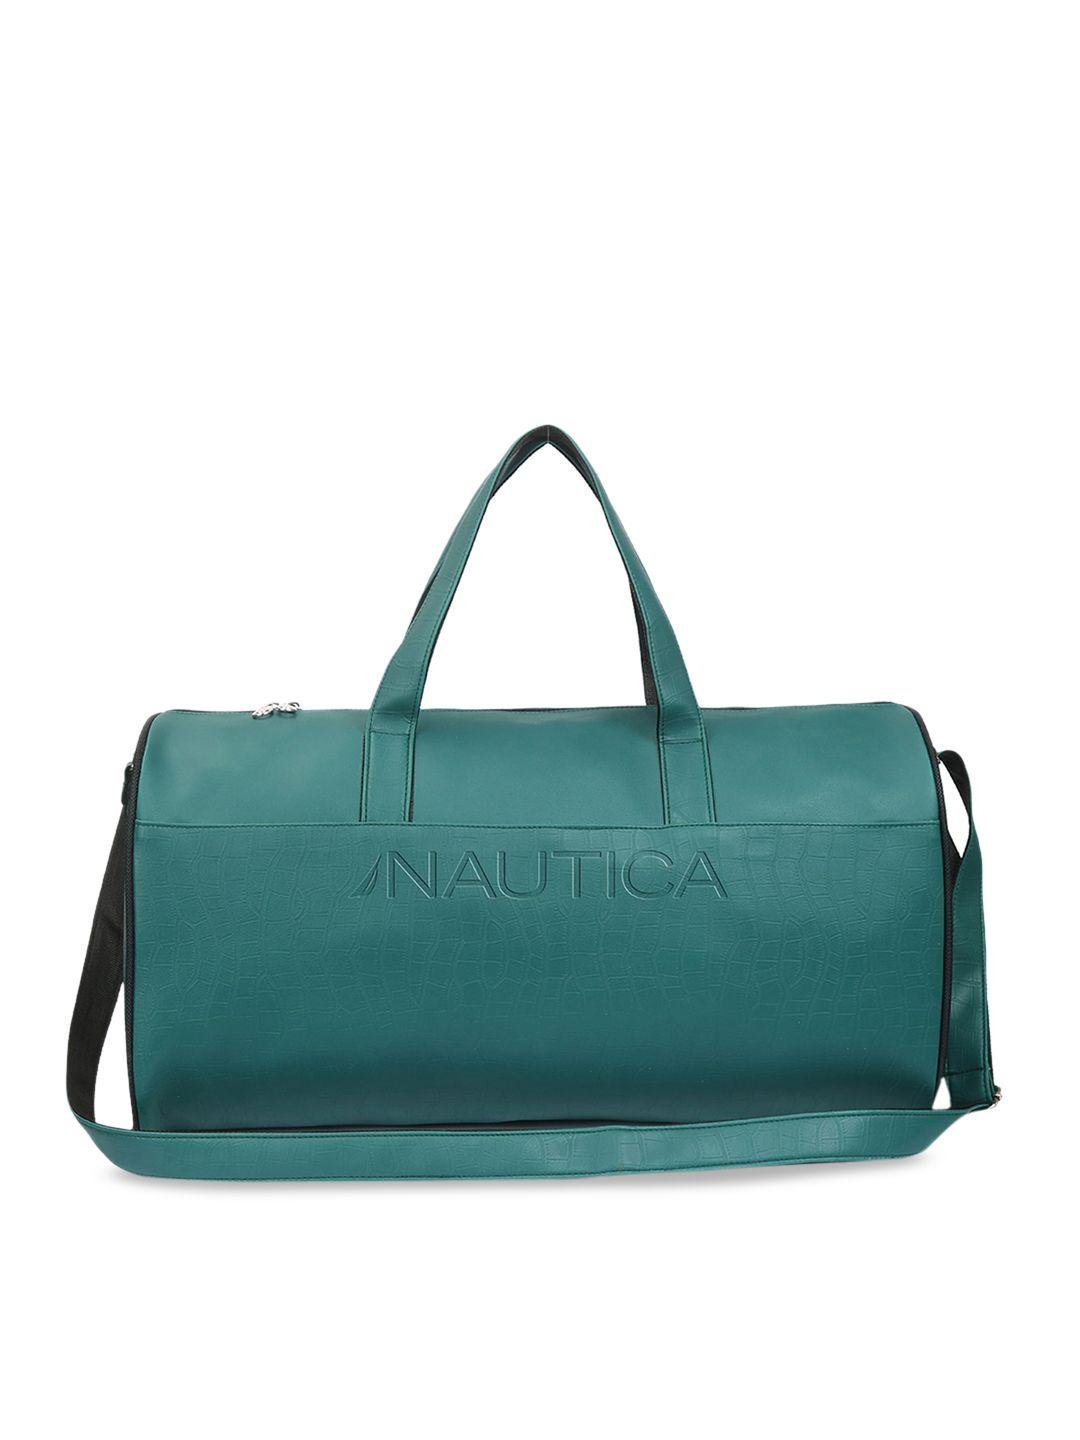 nautica textured travel duffel bag 20 l